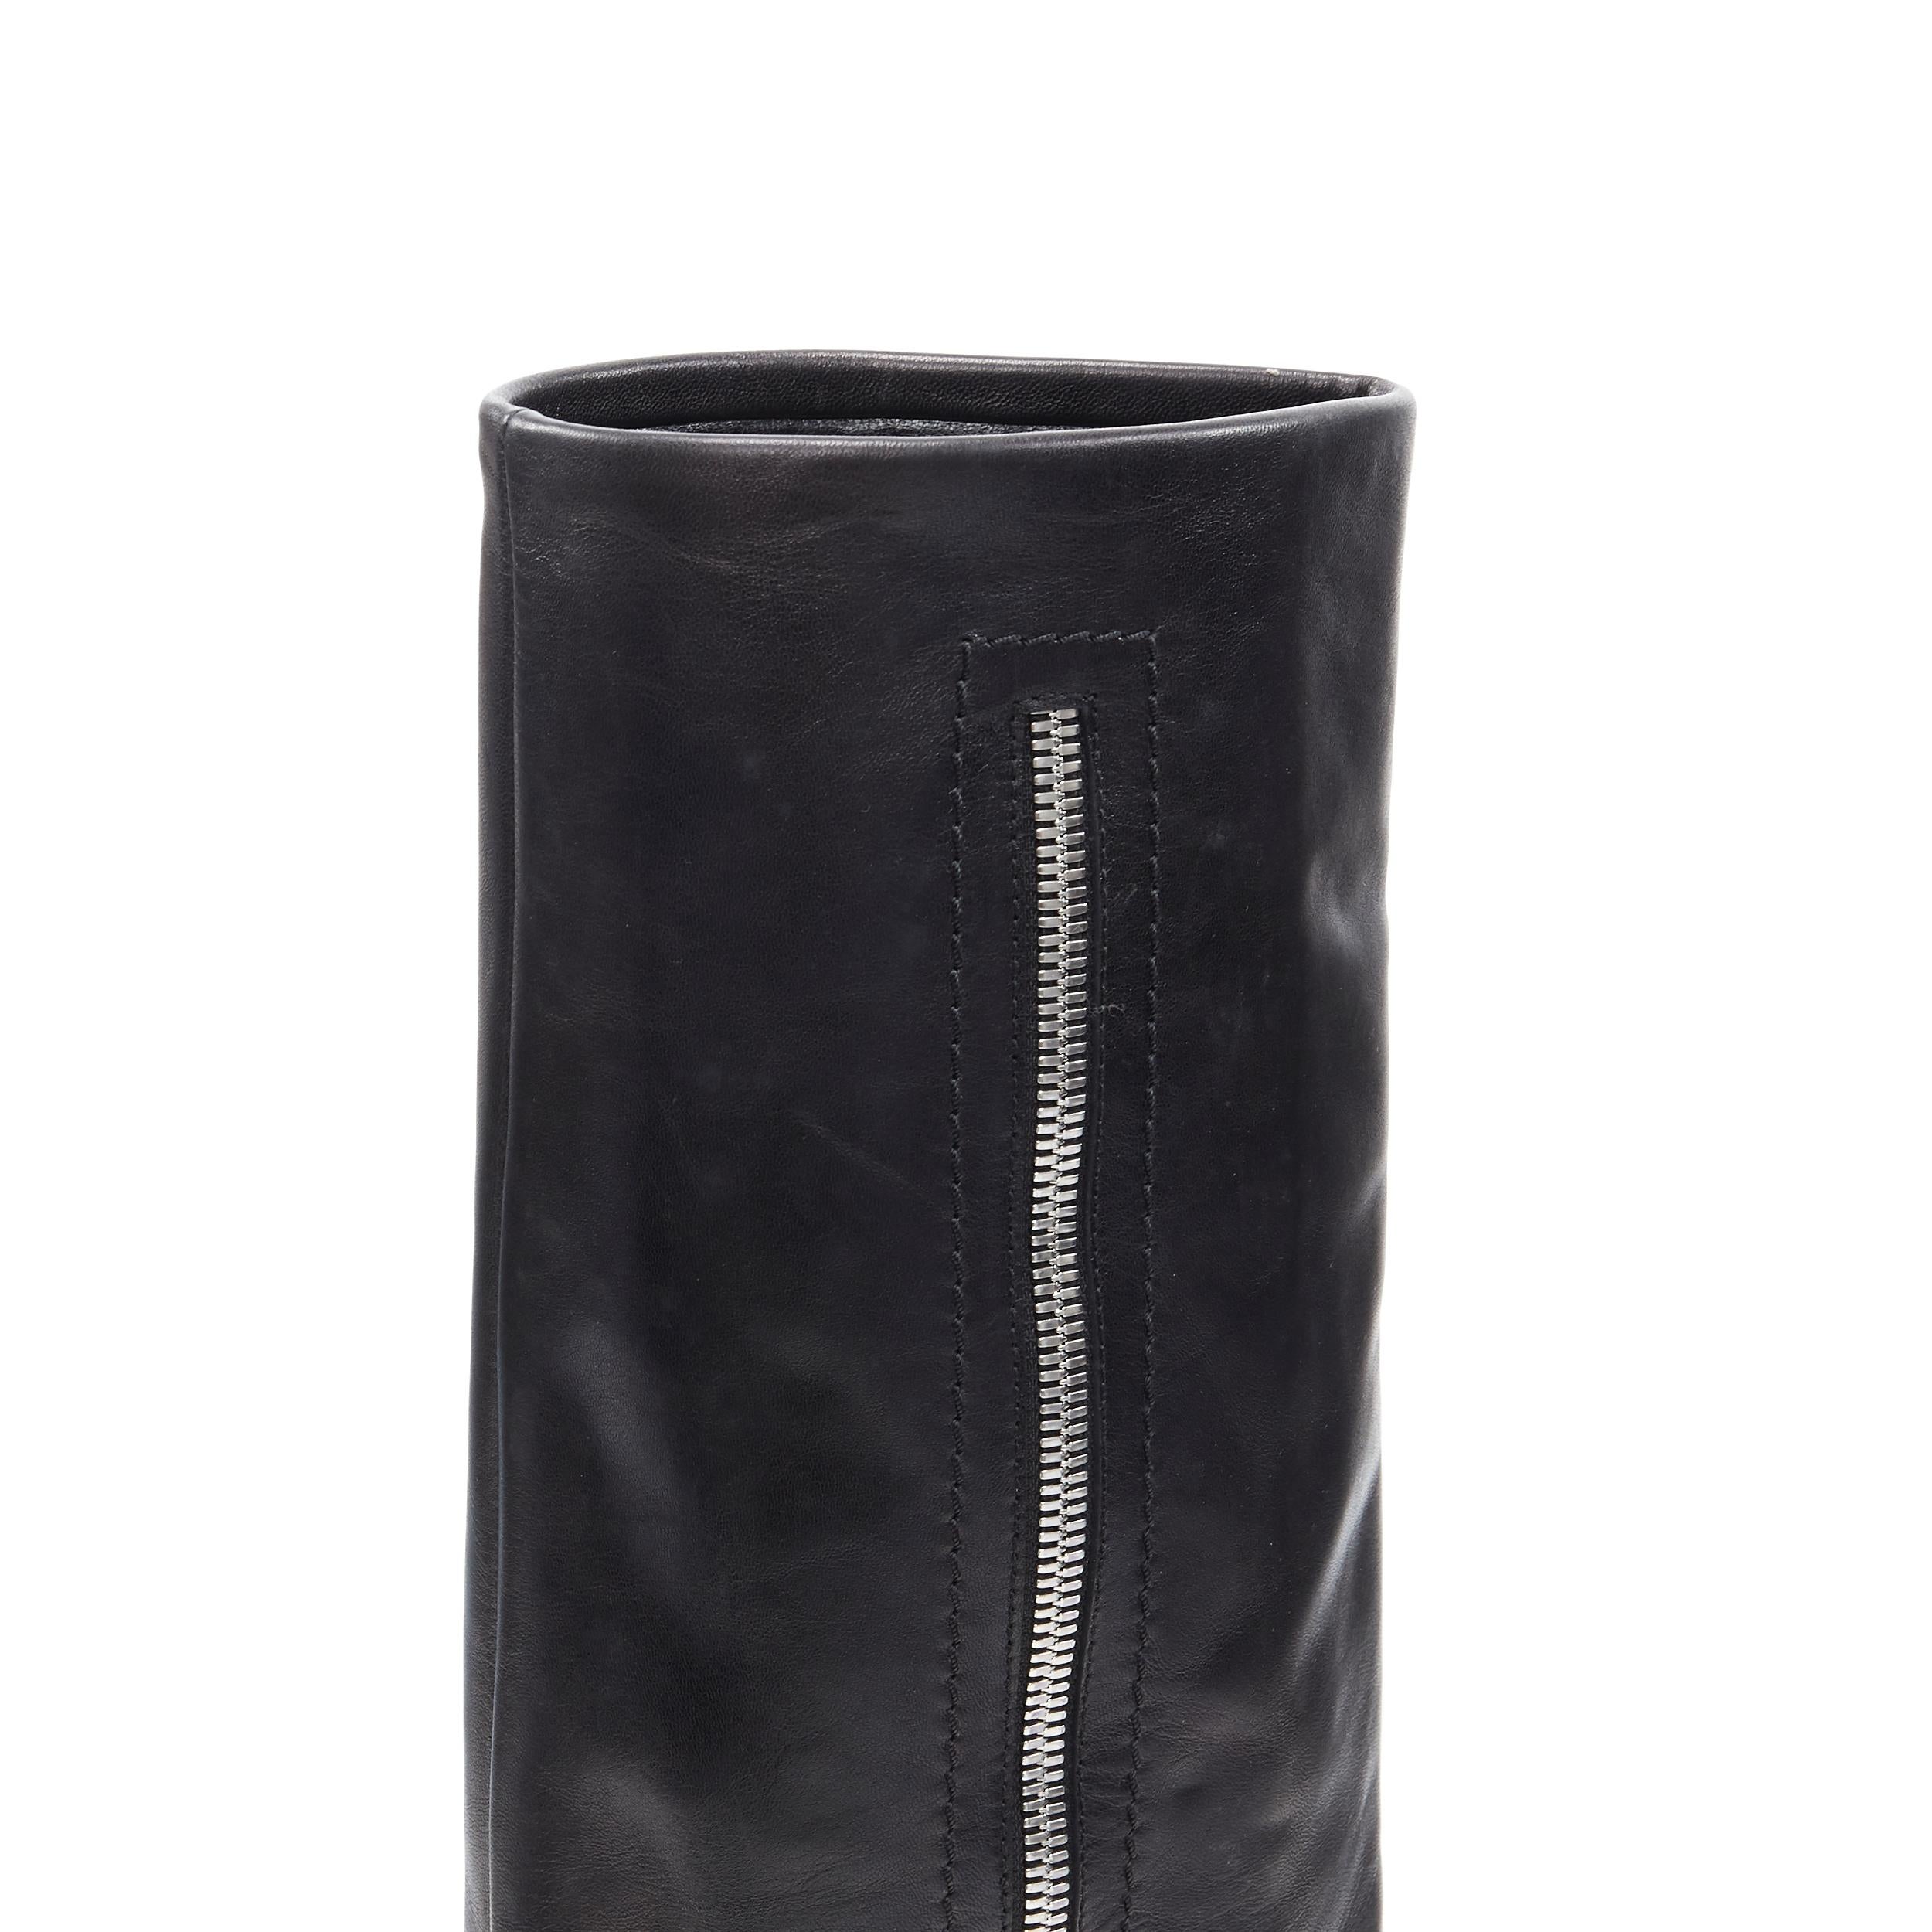 new GIUSEPPE ZANOTTI black leather zipper foldover pant high heel boot EU36 5